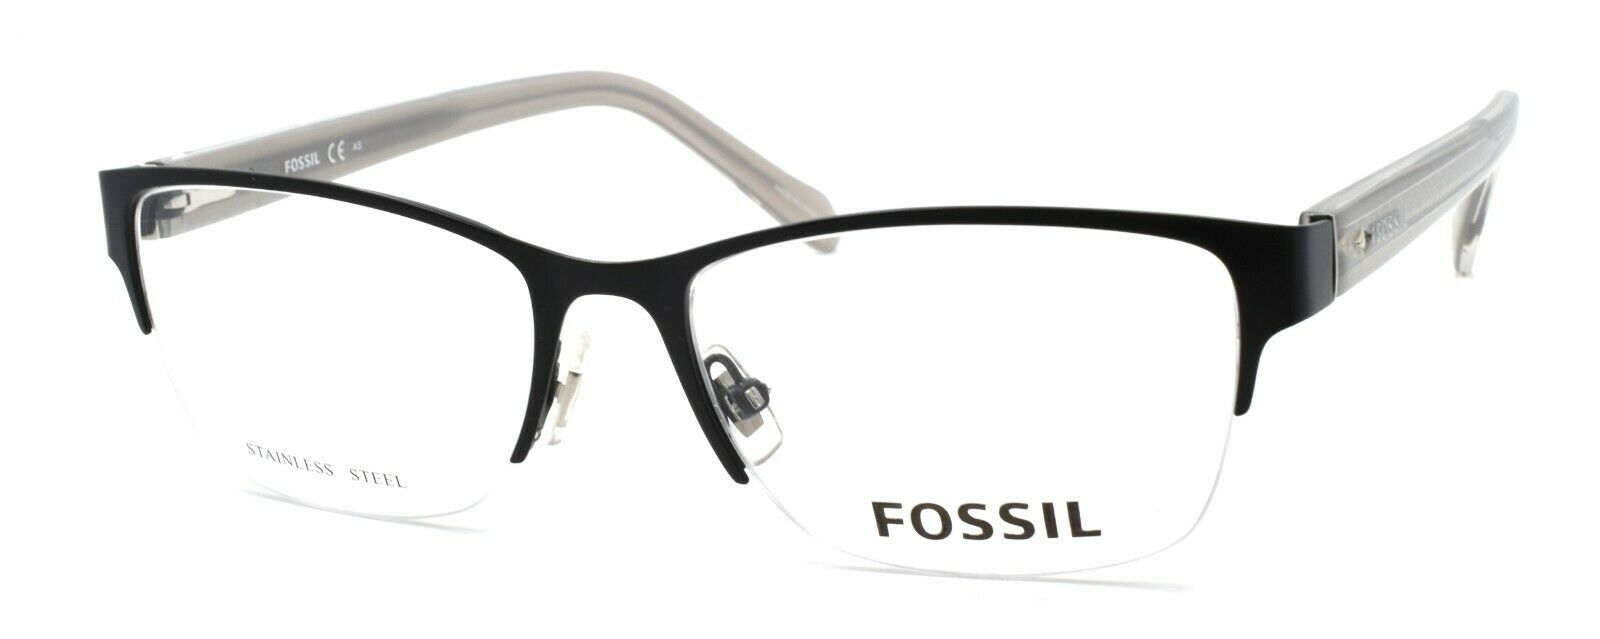 1-Fossil FOS 6045 HI8 Women's Eyeglasses Frames Half-rim 51-16-140 Matte Black-716737681497-IKSpecs